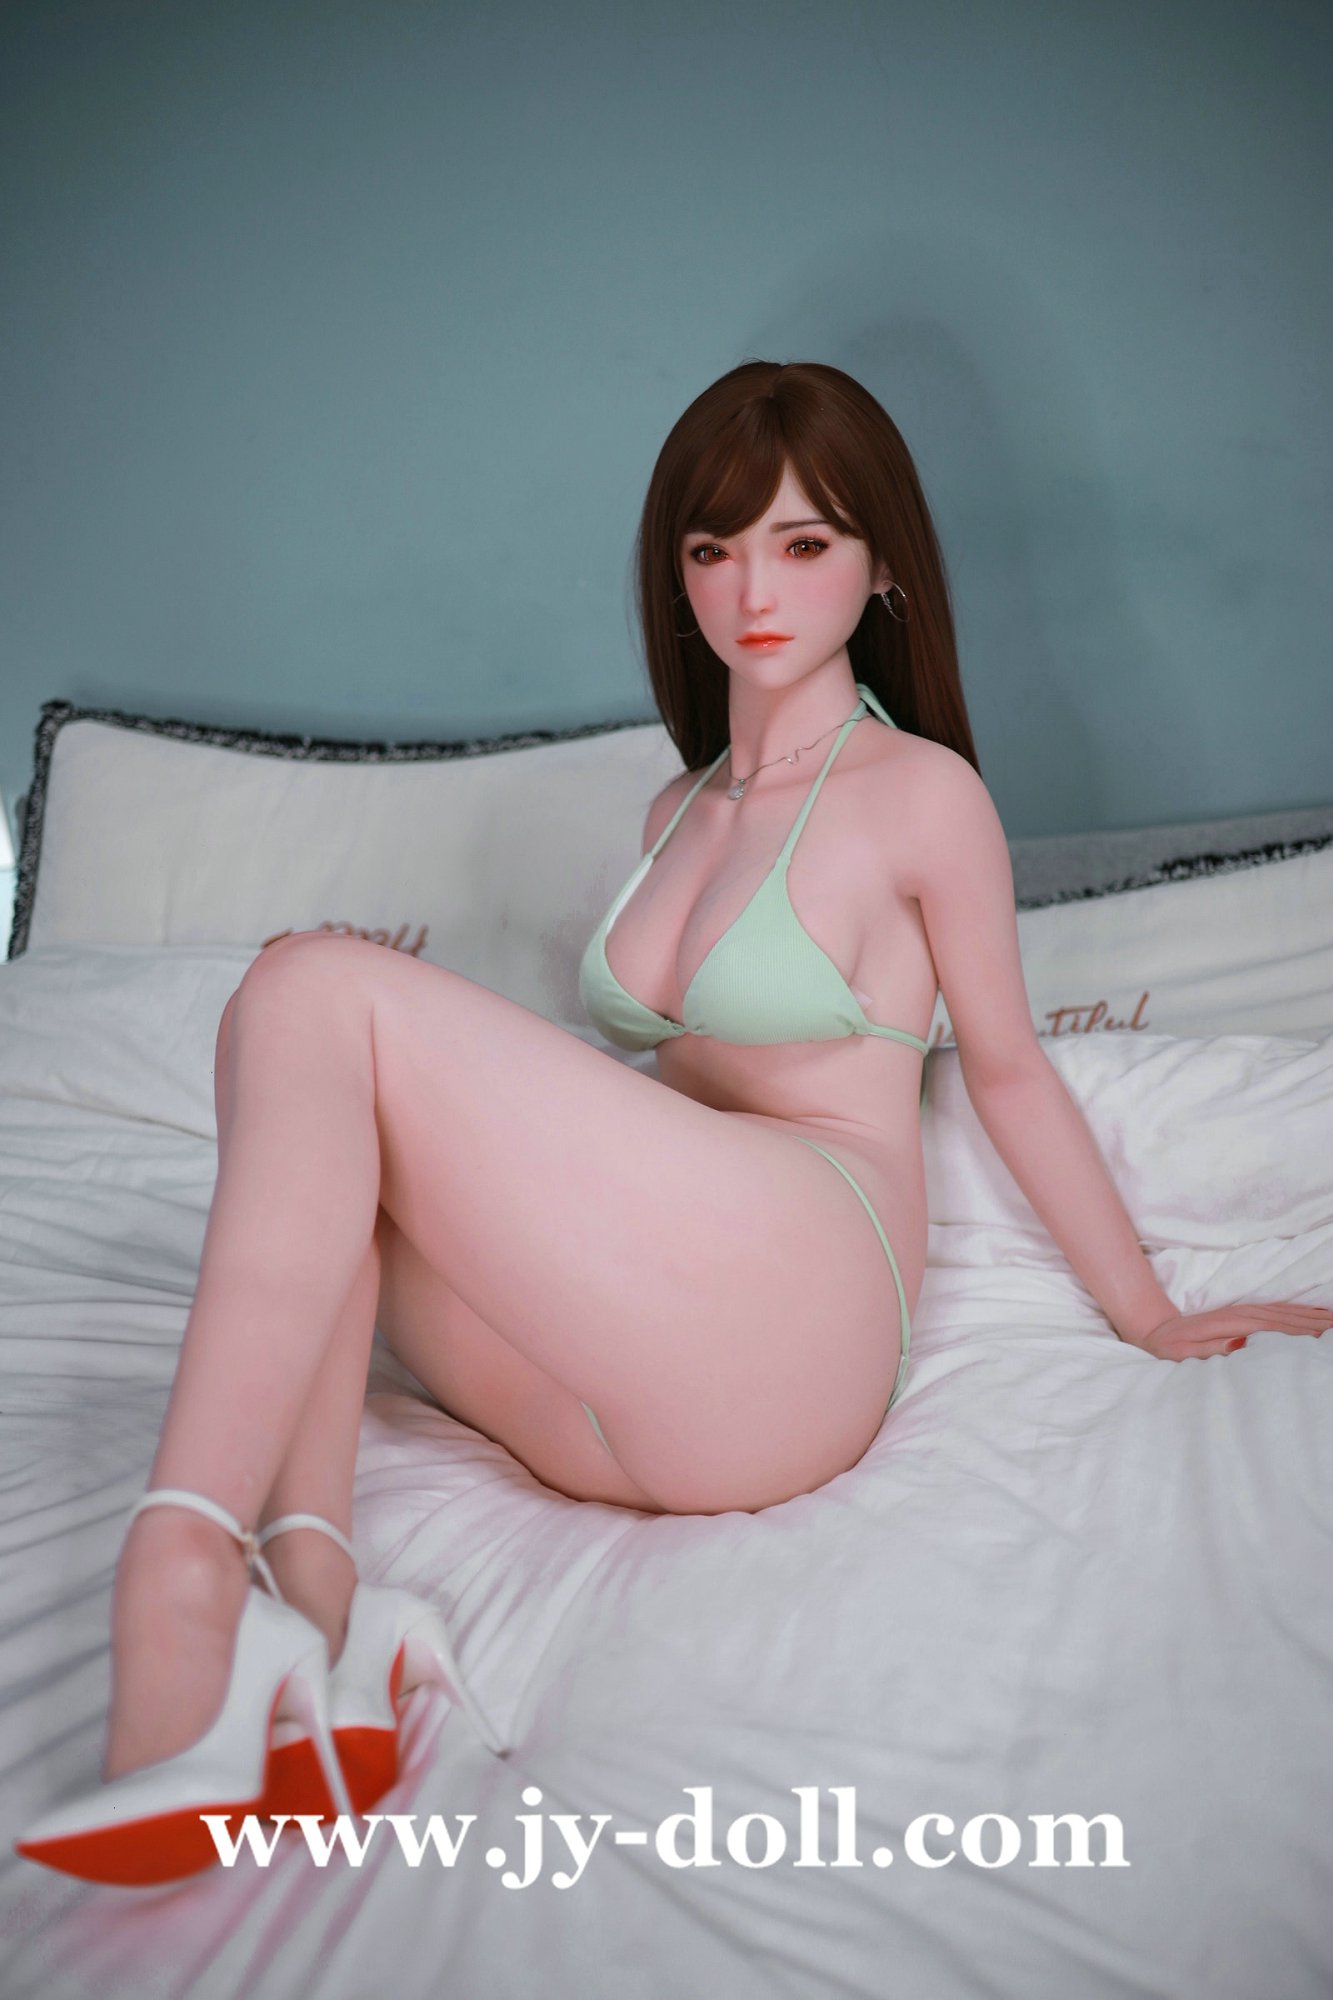 JY Doll 168cm full silicone big boobs love doll Peach